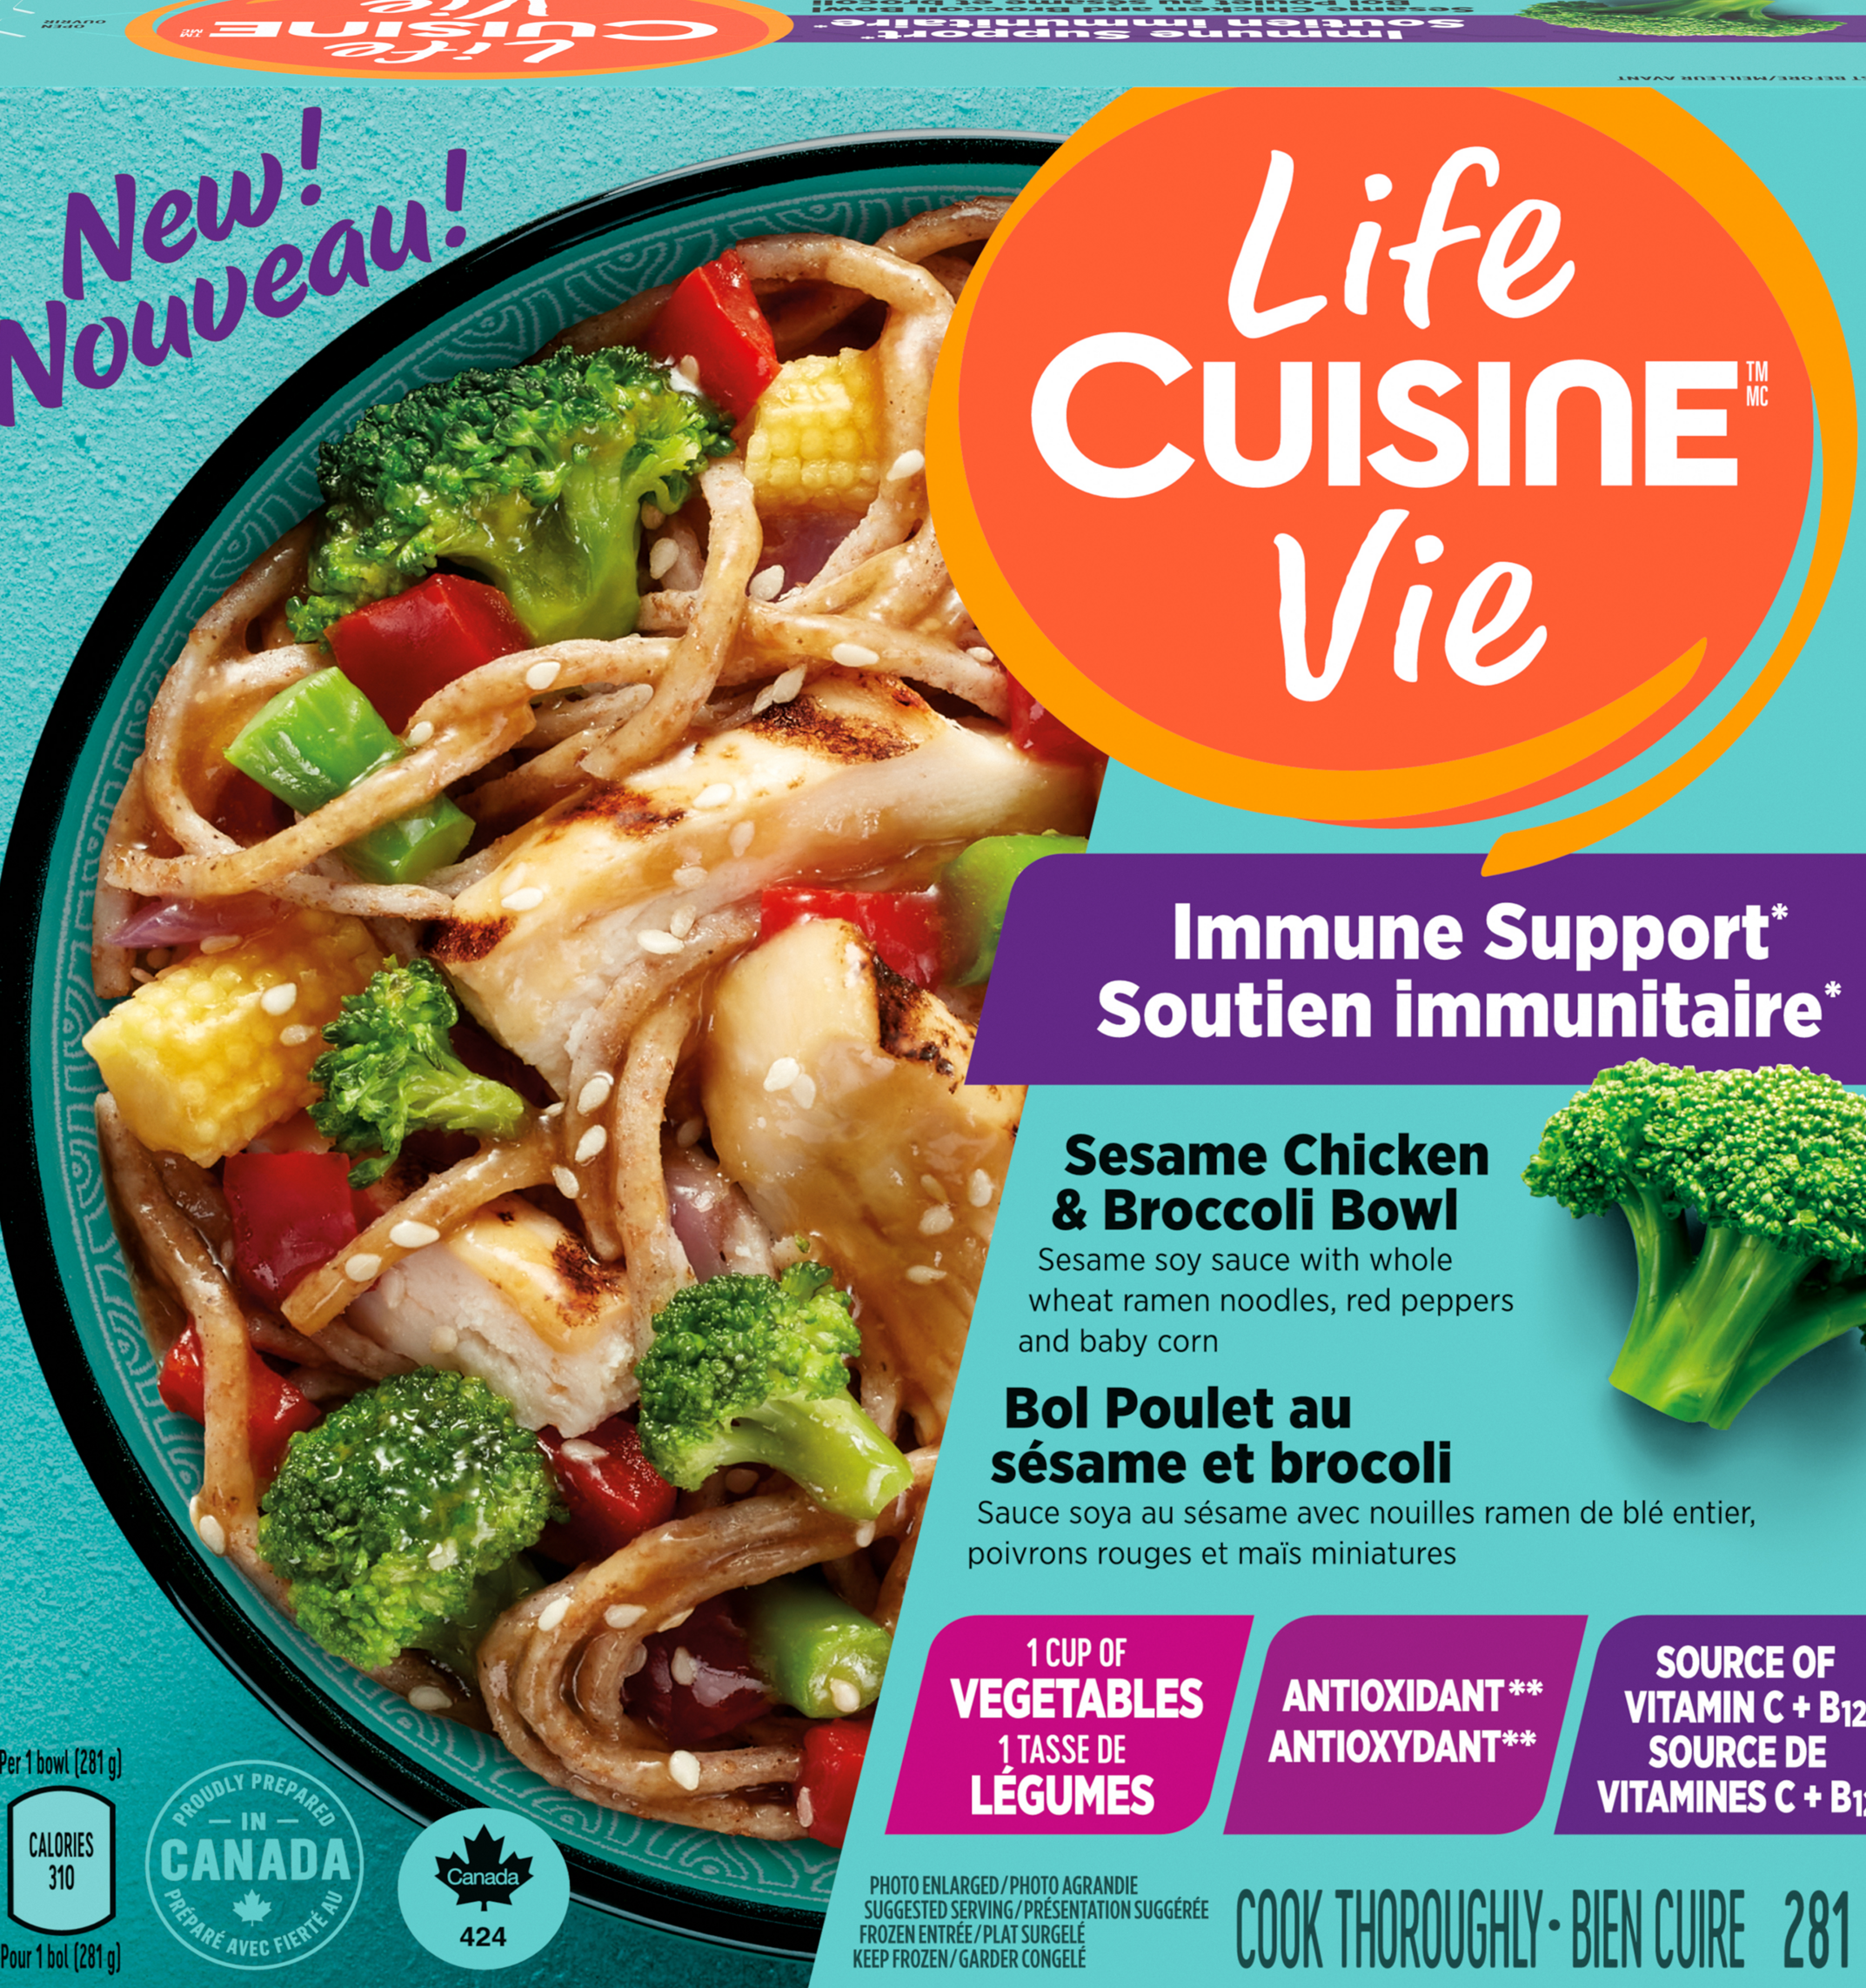 LIFE CUISINE Sesame & Bowl | Made with nestle